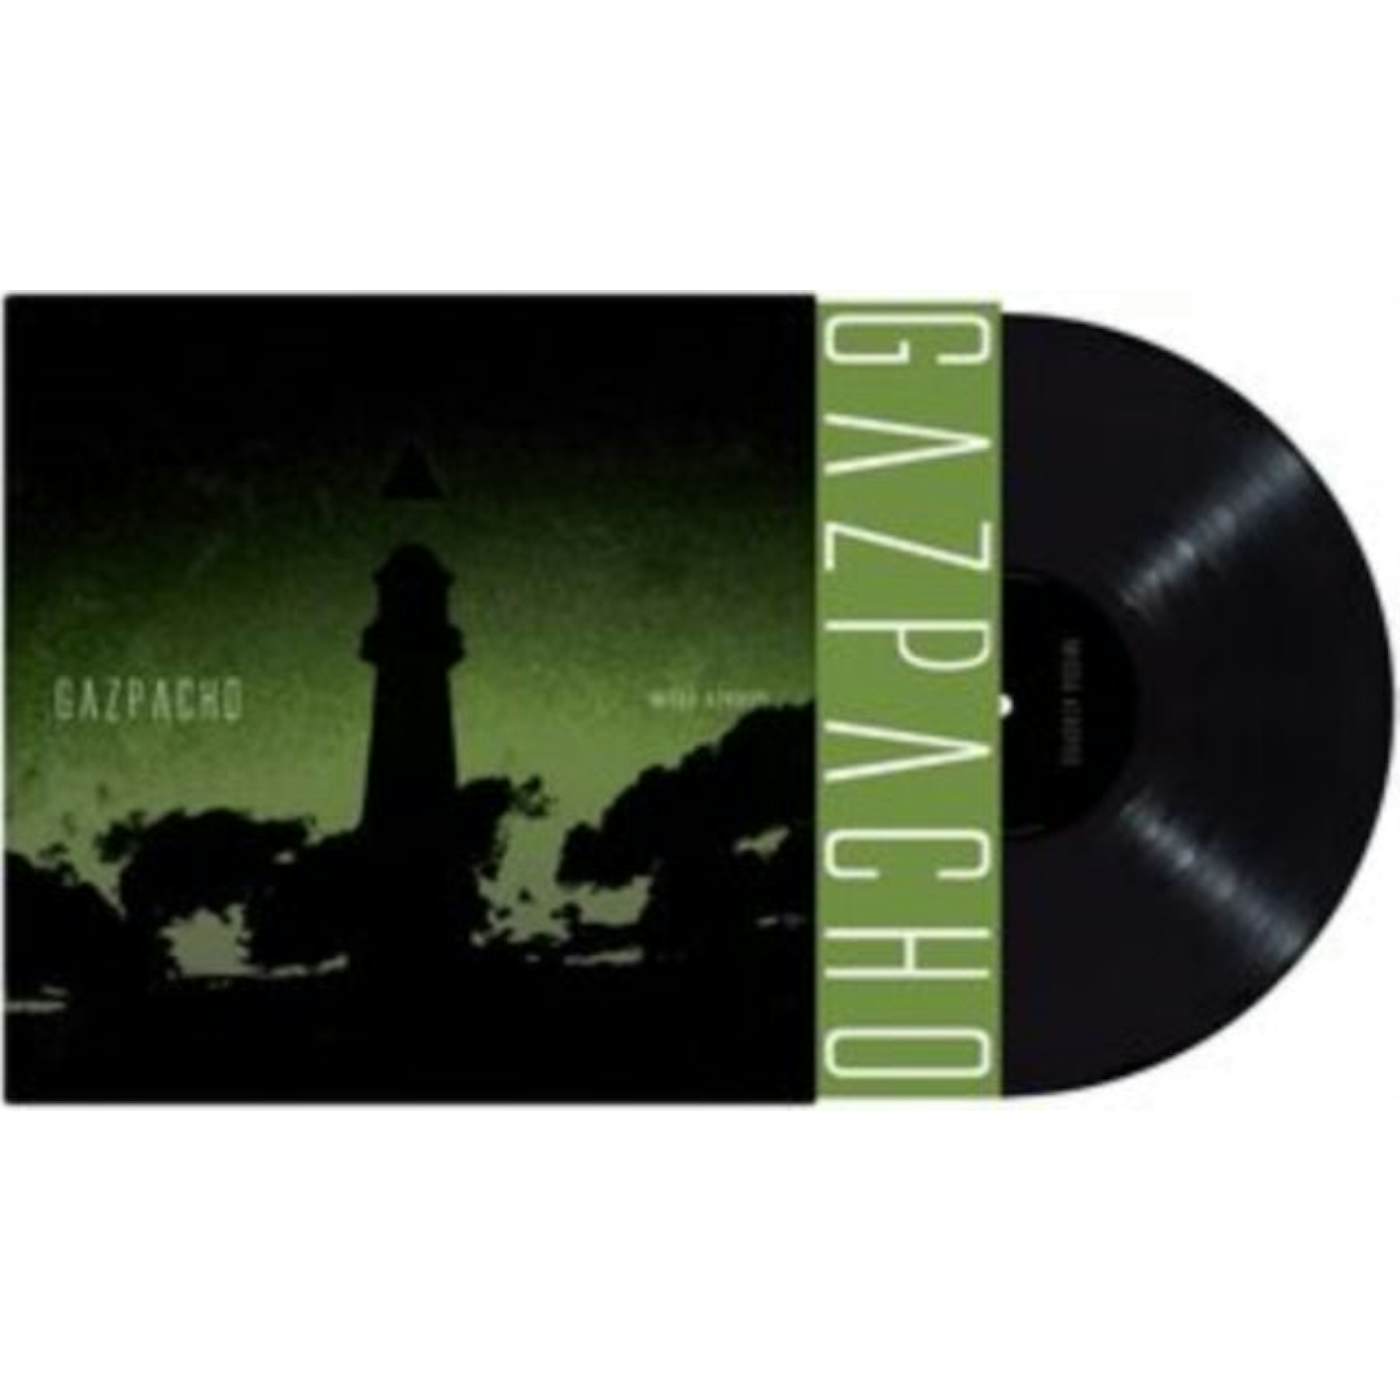 Gazpacho LP Vinyl Record - Missa Atropos